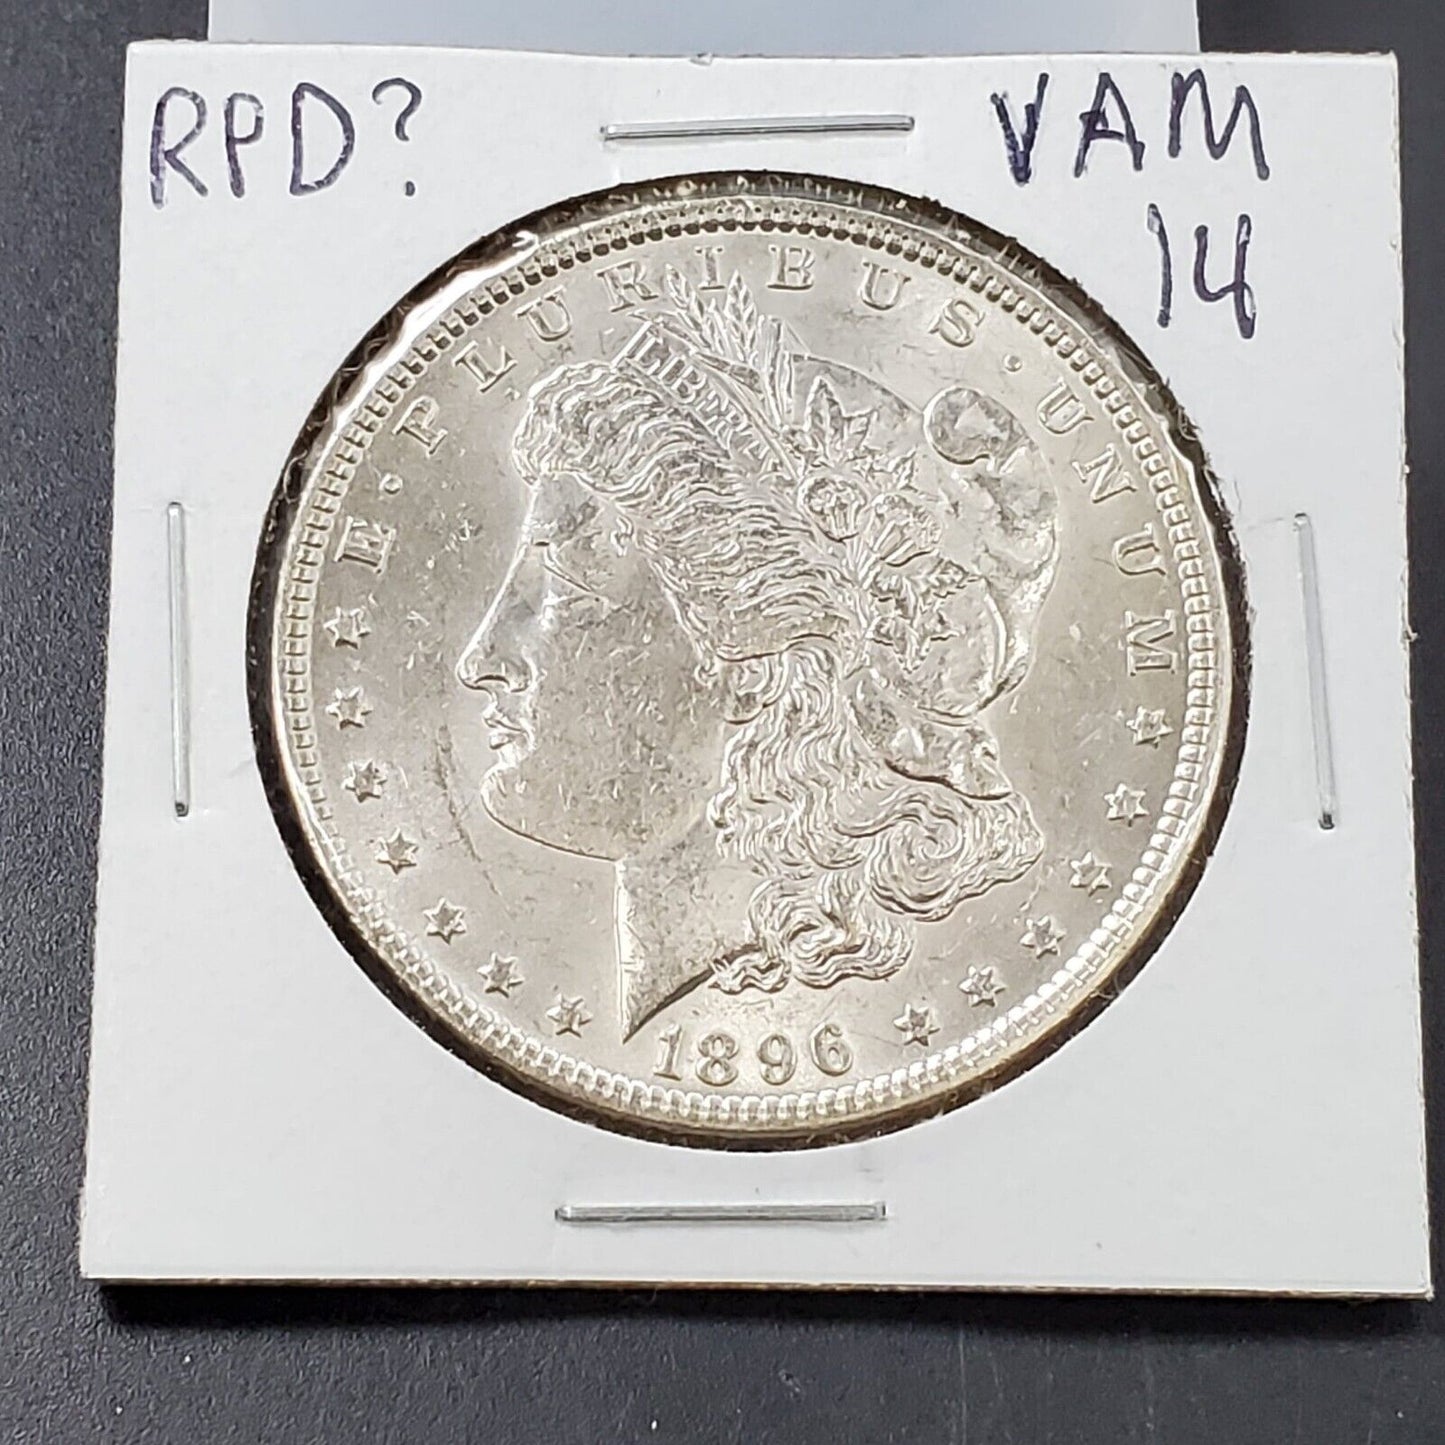 1896 P Morgan Silver Dollar Coin RPD North - Vam 14 Variety BU UNC HARD TO FIND!